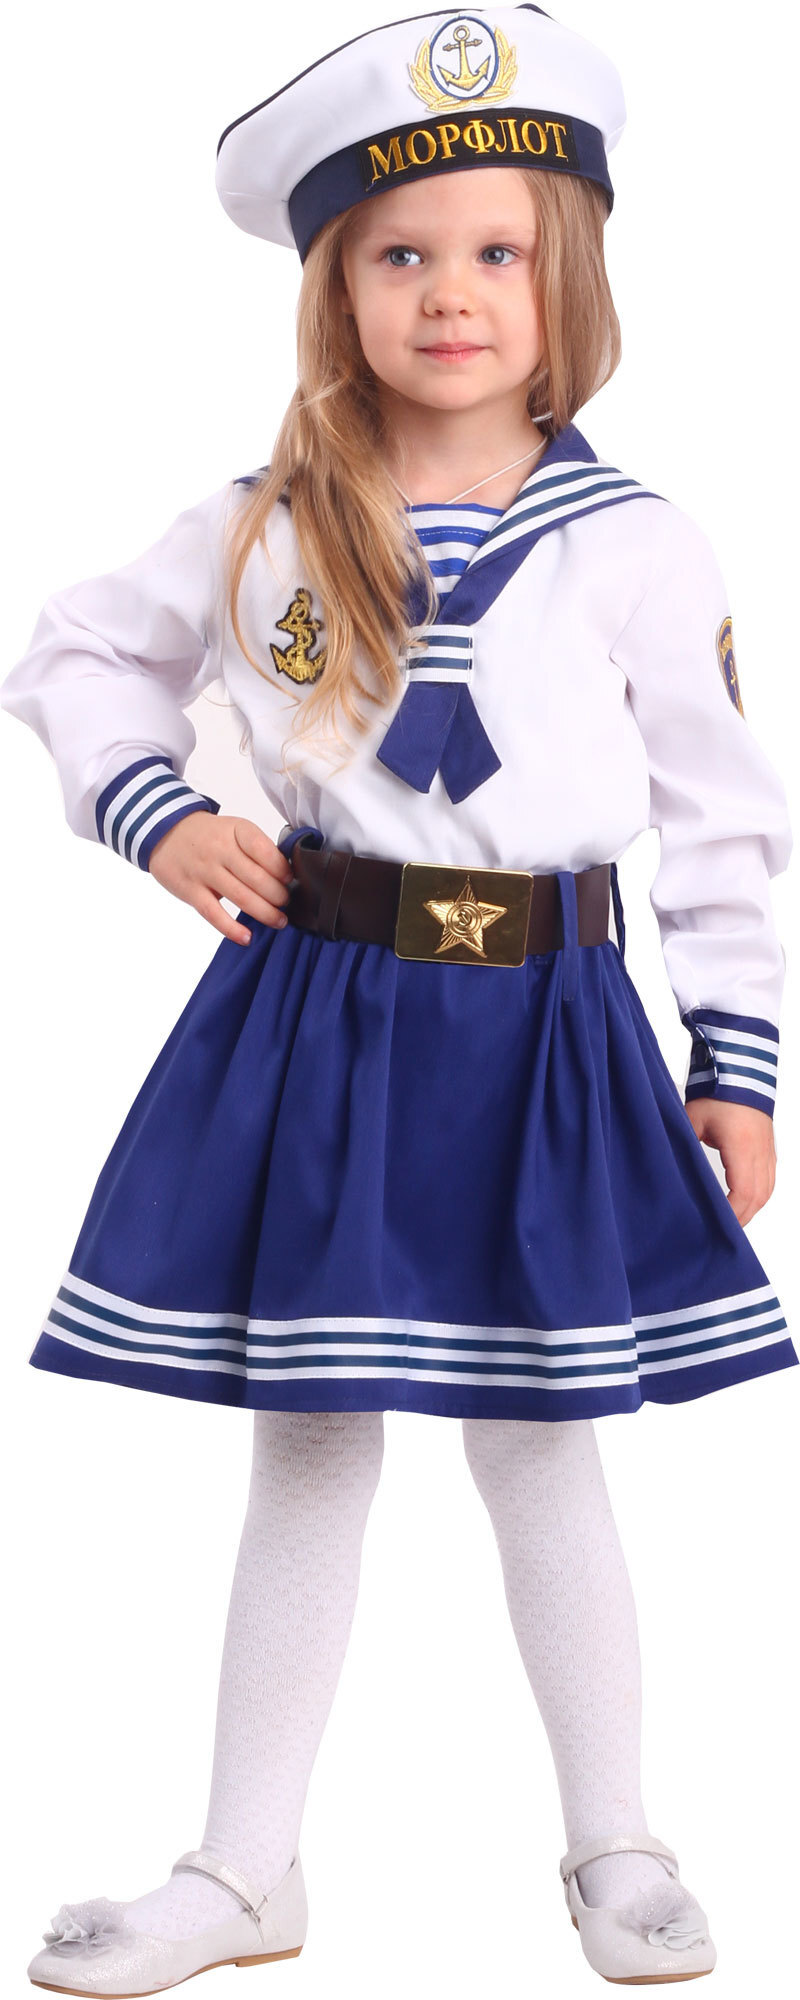 Костюм моряка для девочки своими руками